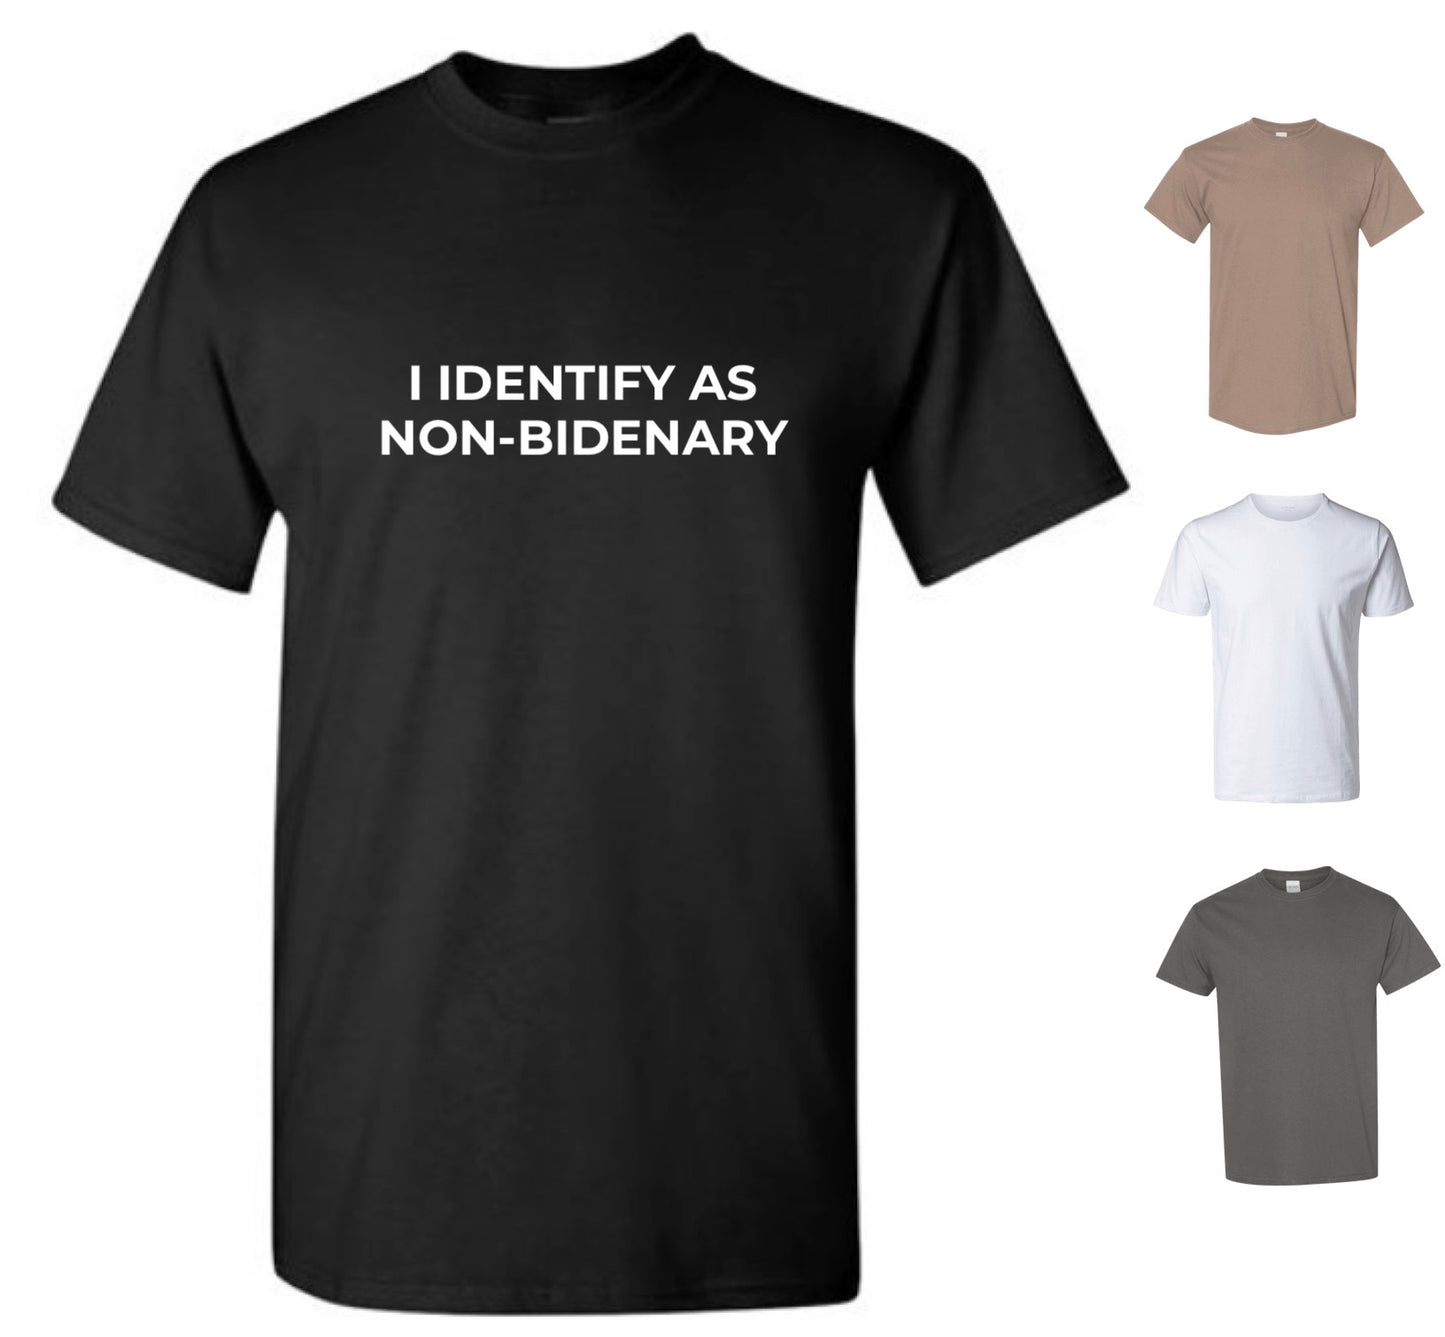 I Identify As Non-Bidenary T-Shirt (with FREE Shipping)